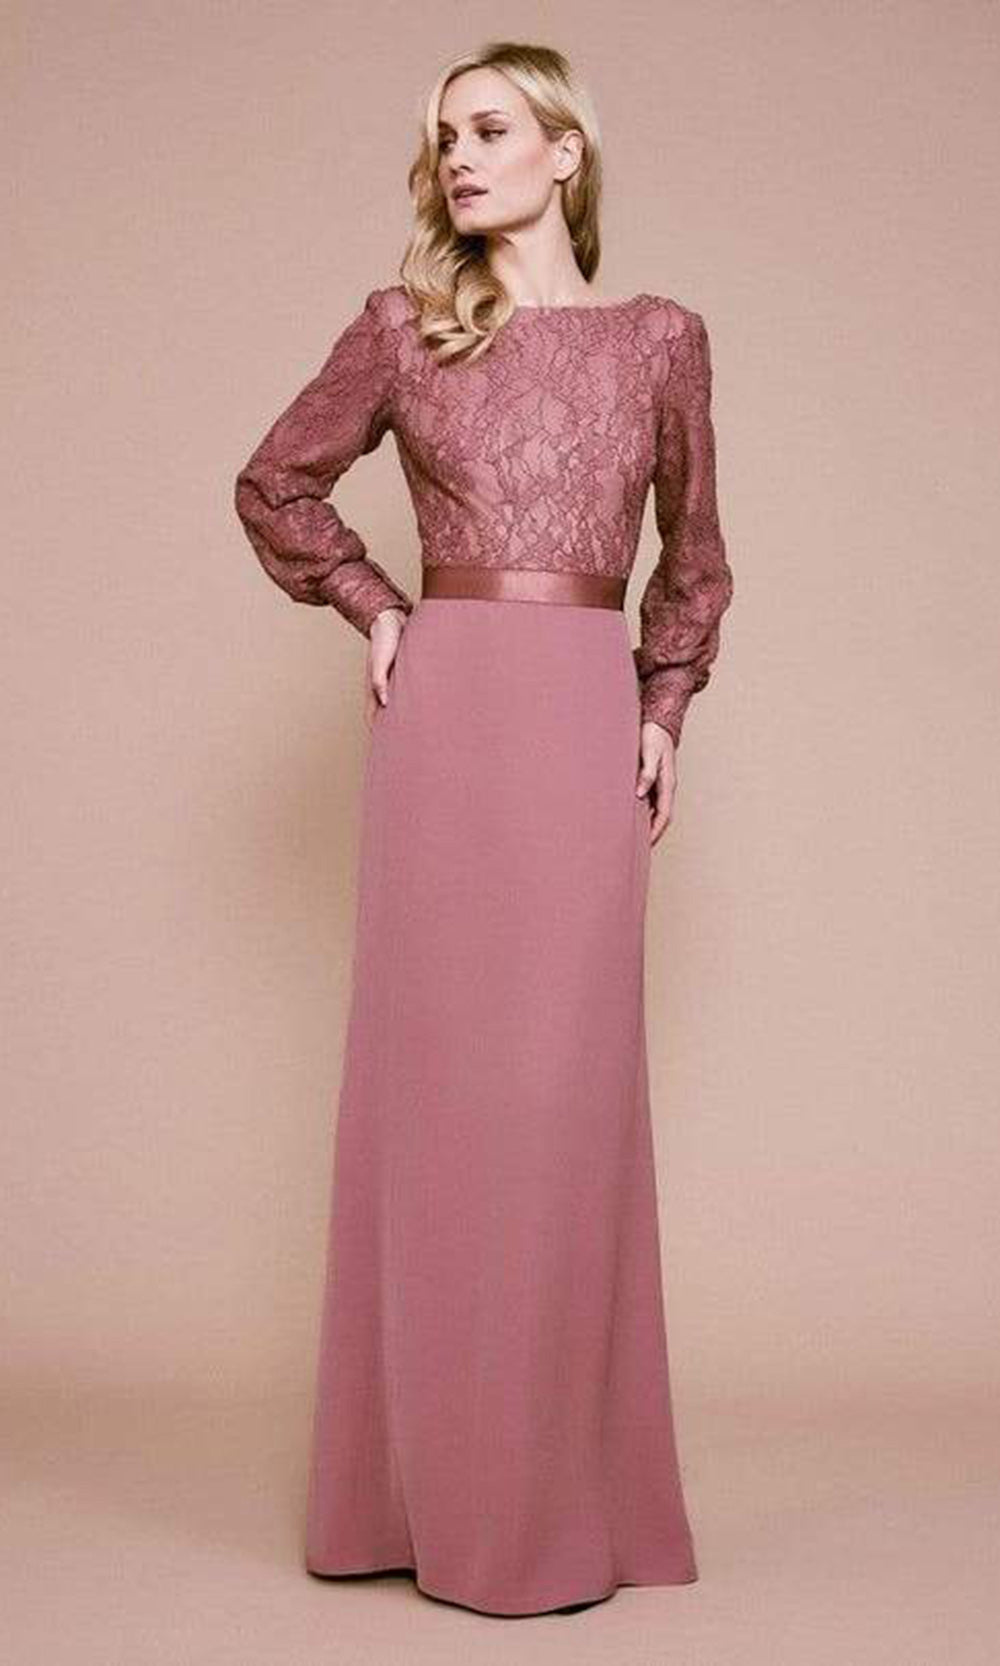 Tadashi Shoji - Bishop Sleeve Lace Bodice Dress In Pink